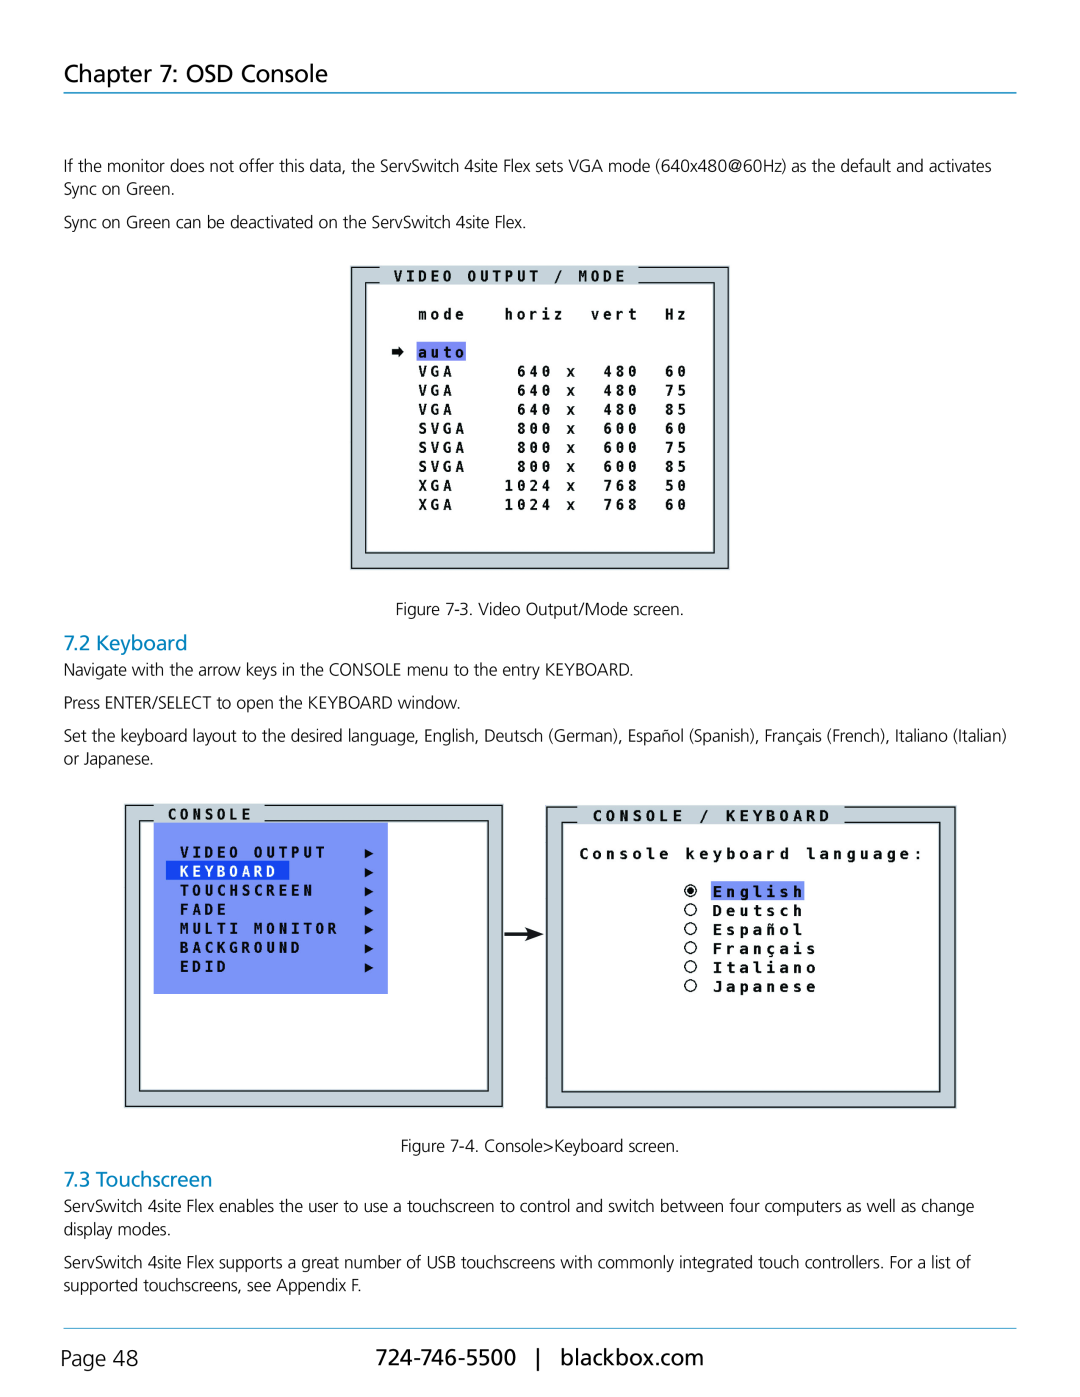 Black Box KVP40004A, servswitch 4site flex manual Keyboard, Touchscreen, OSD Console, Page 